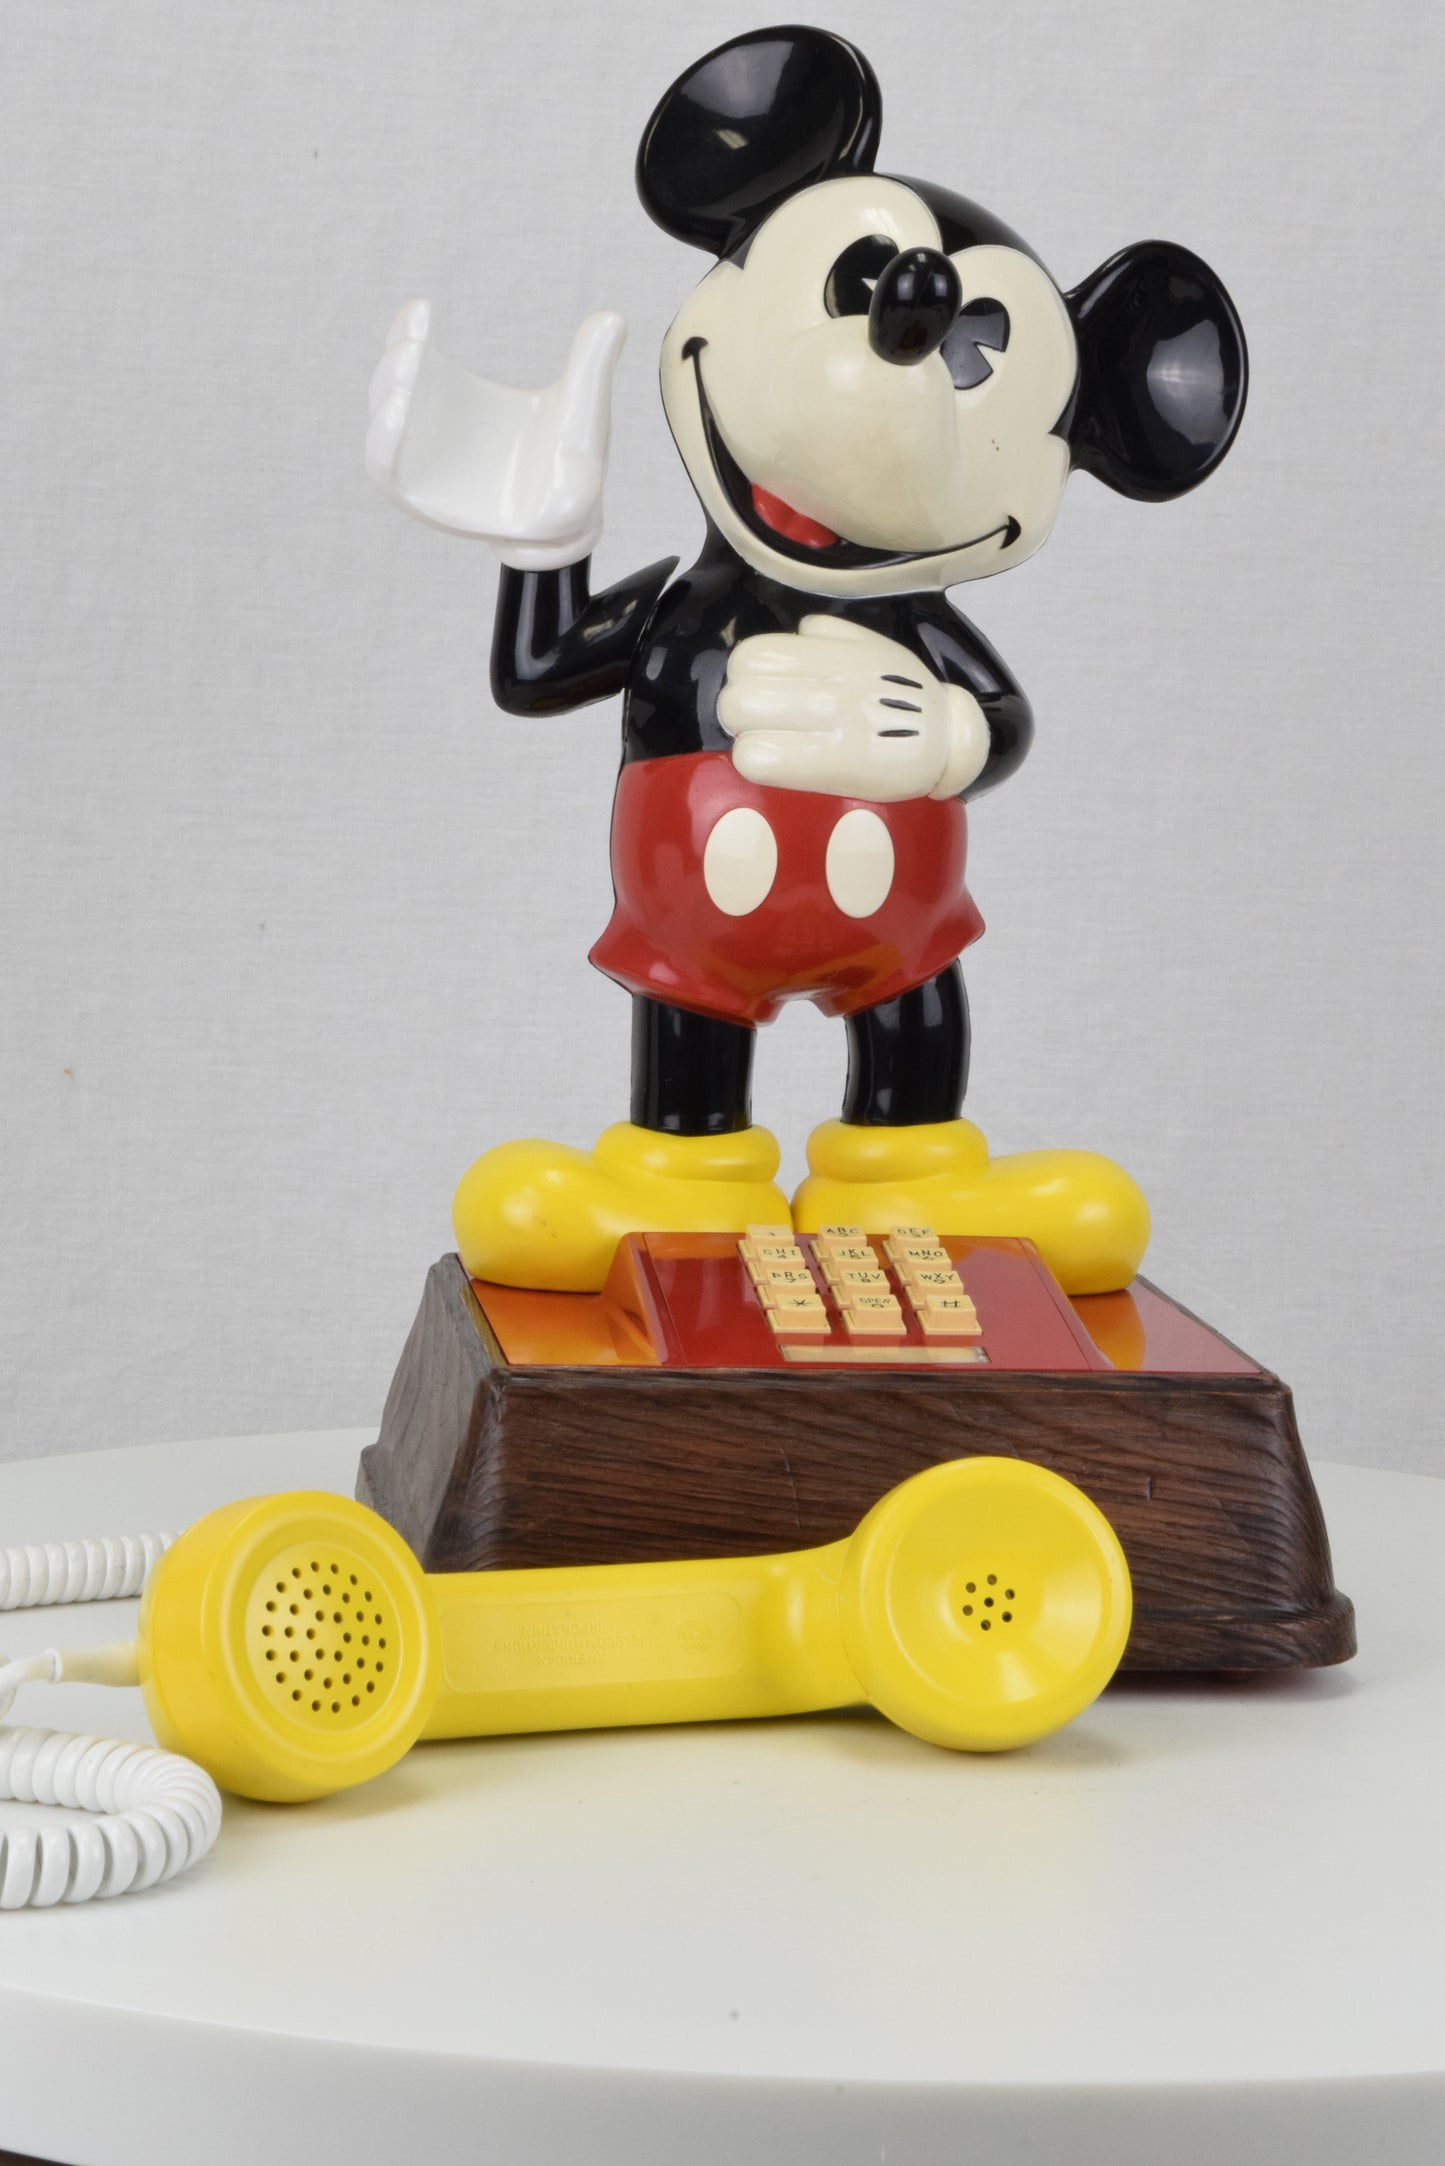 The Mickey Mouse Phone - 1970's Nostalgia!